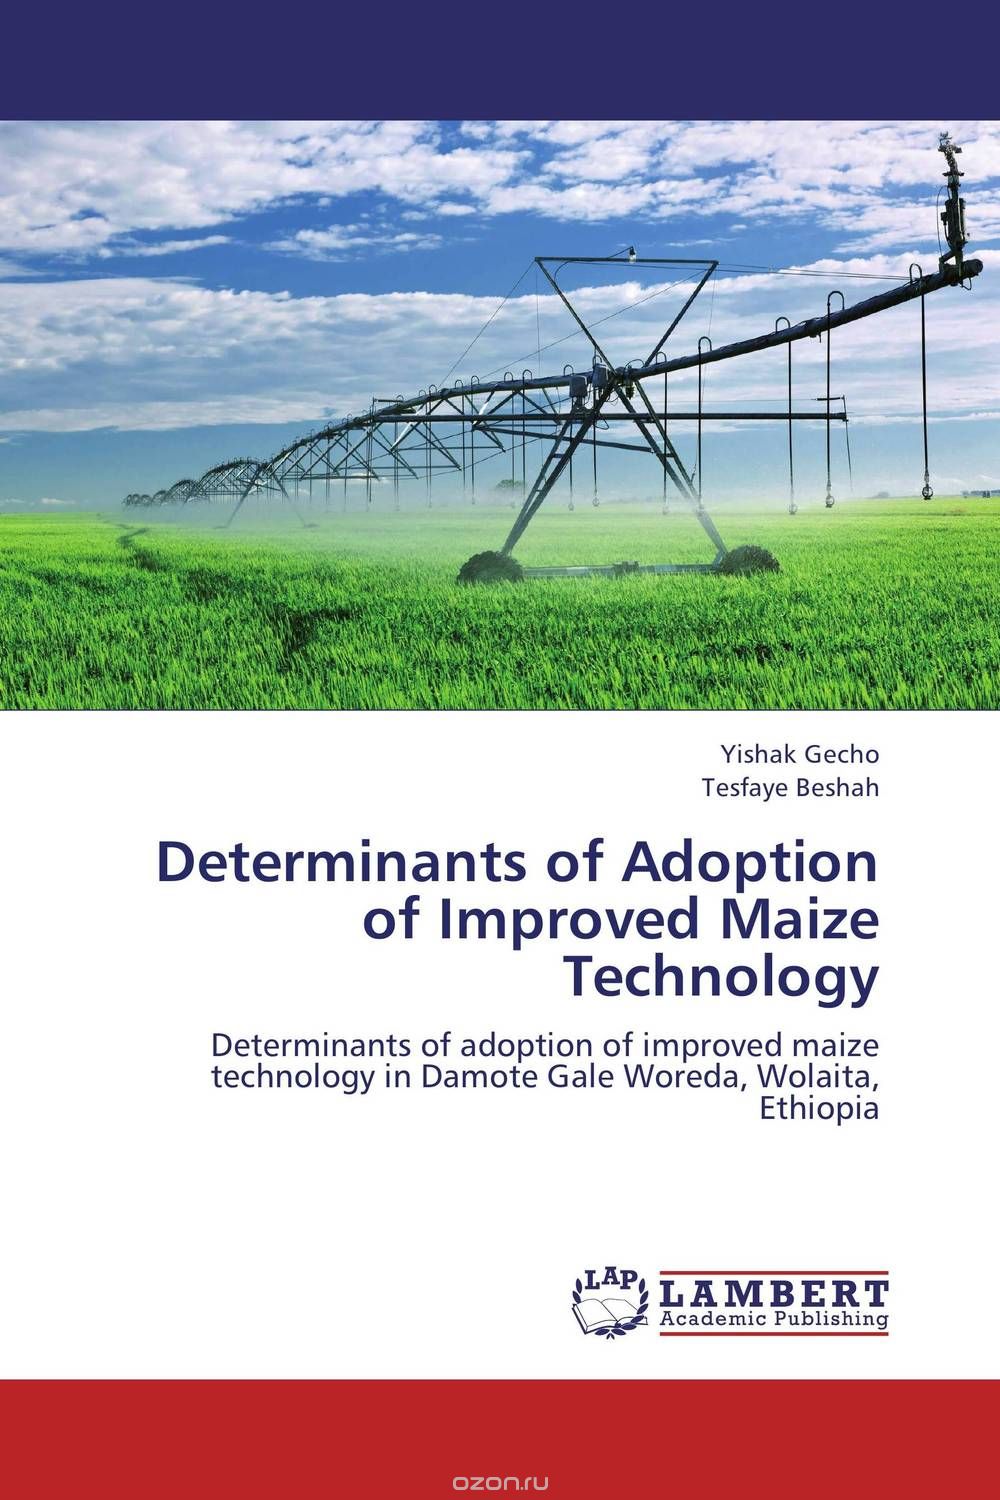 Скачать книгу "Determinants of Adoption of Improved Maize Technology"